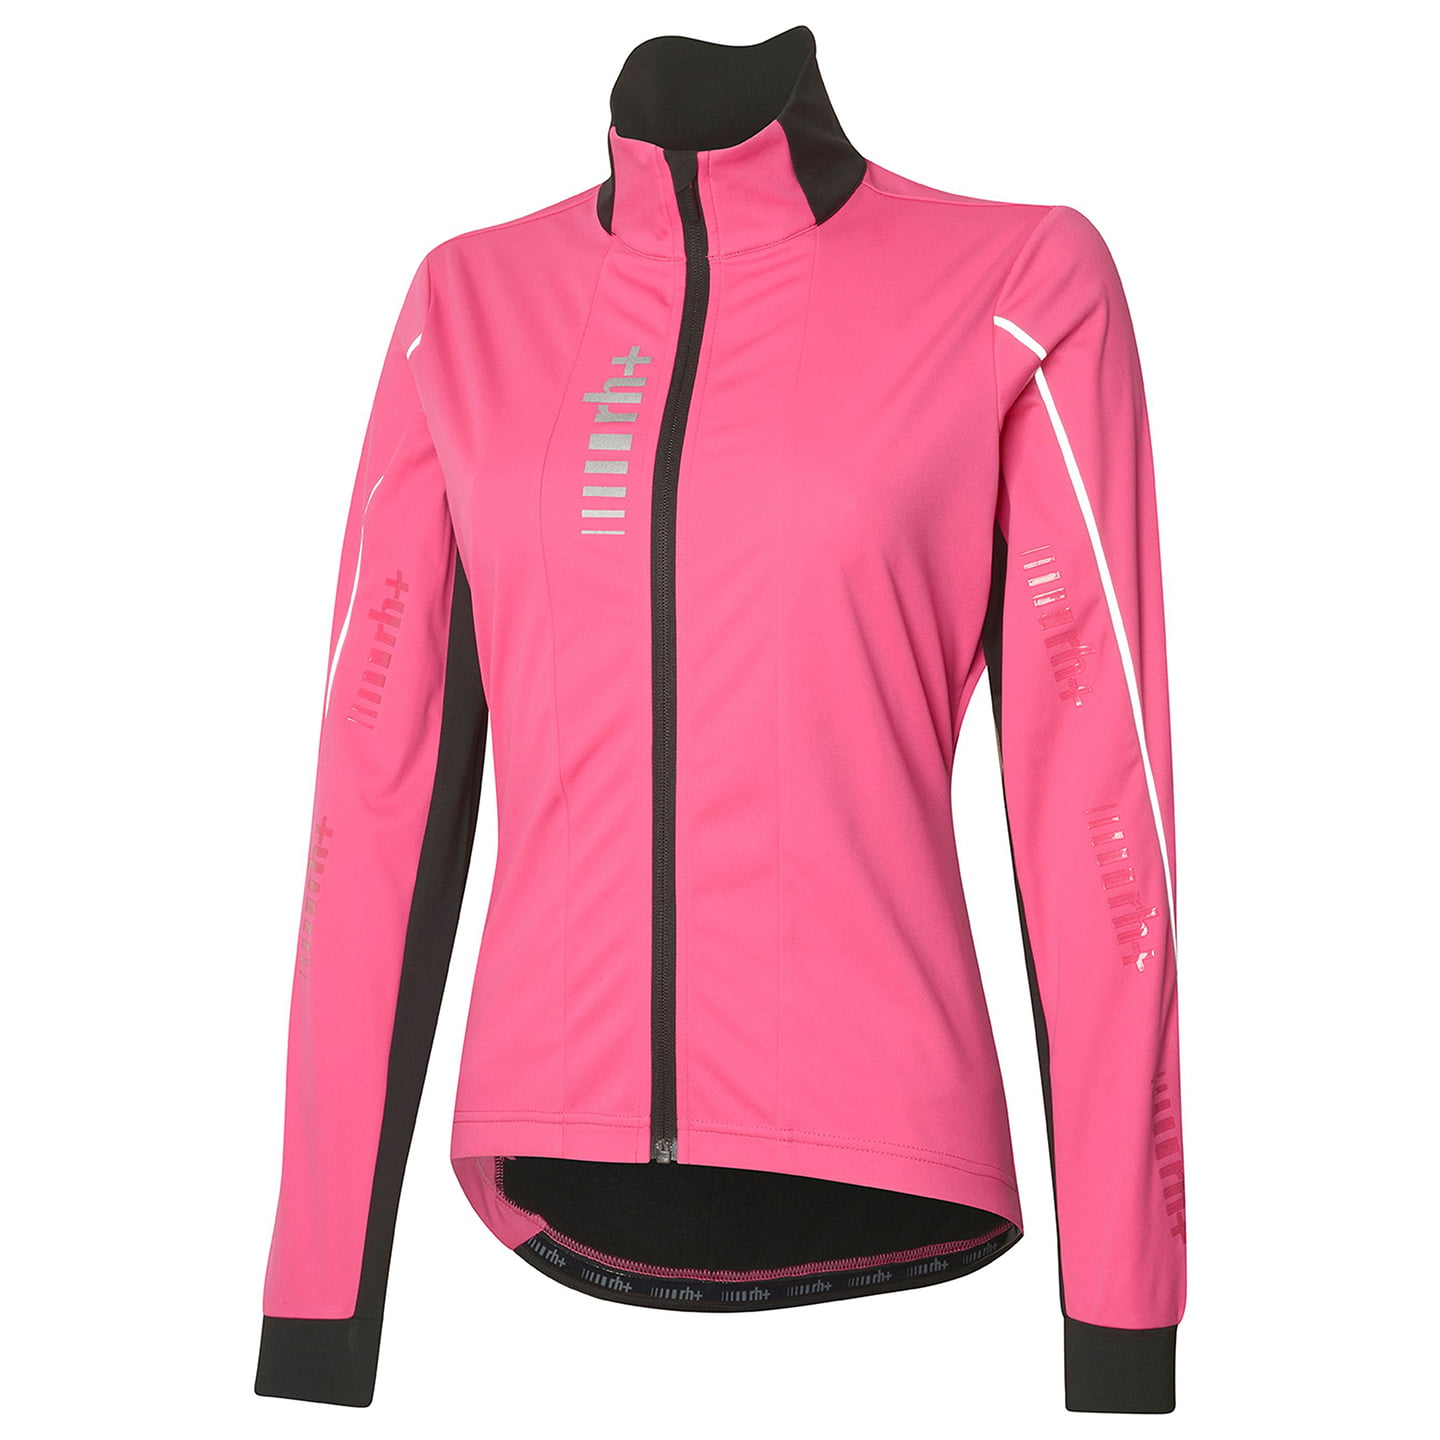 RH+ Ladies Winter Jacket Code Women’s Wind Jacket, size L, Cycle jacket, Cycling clothing